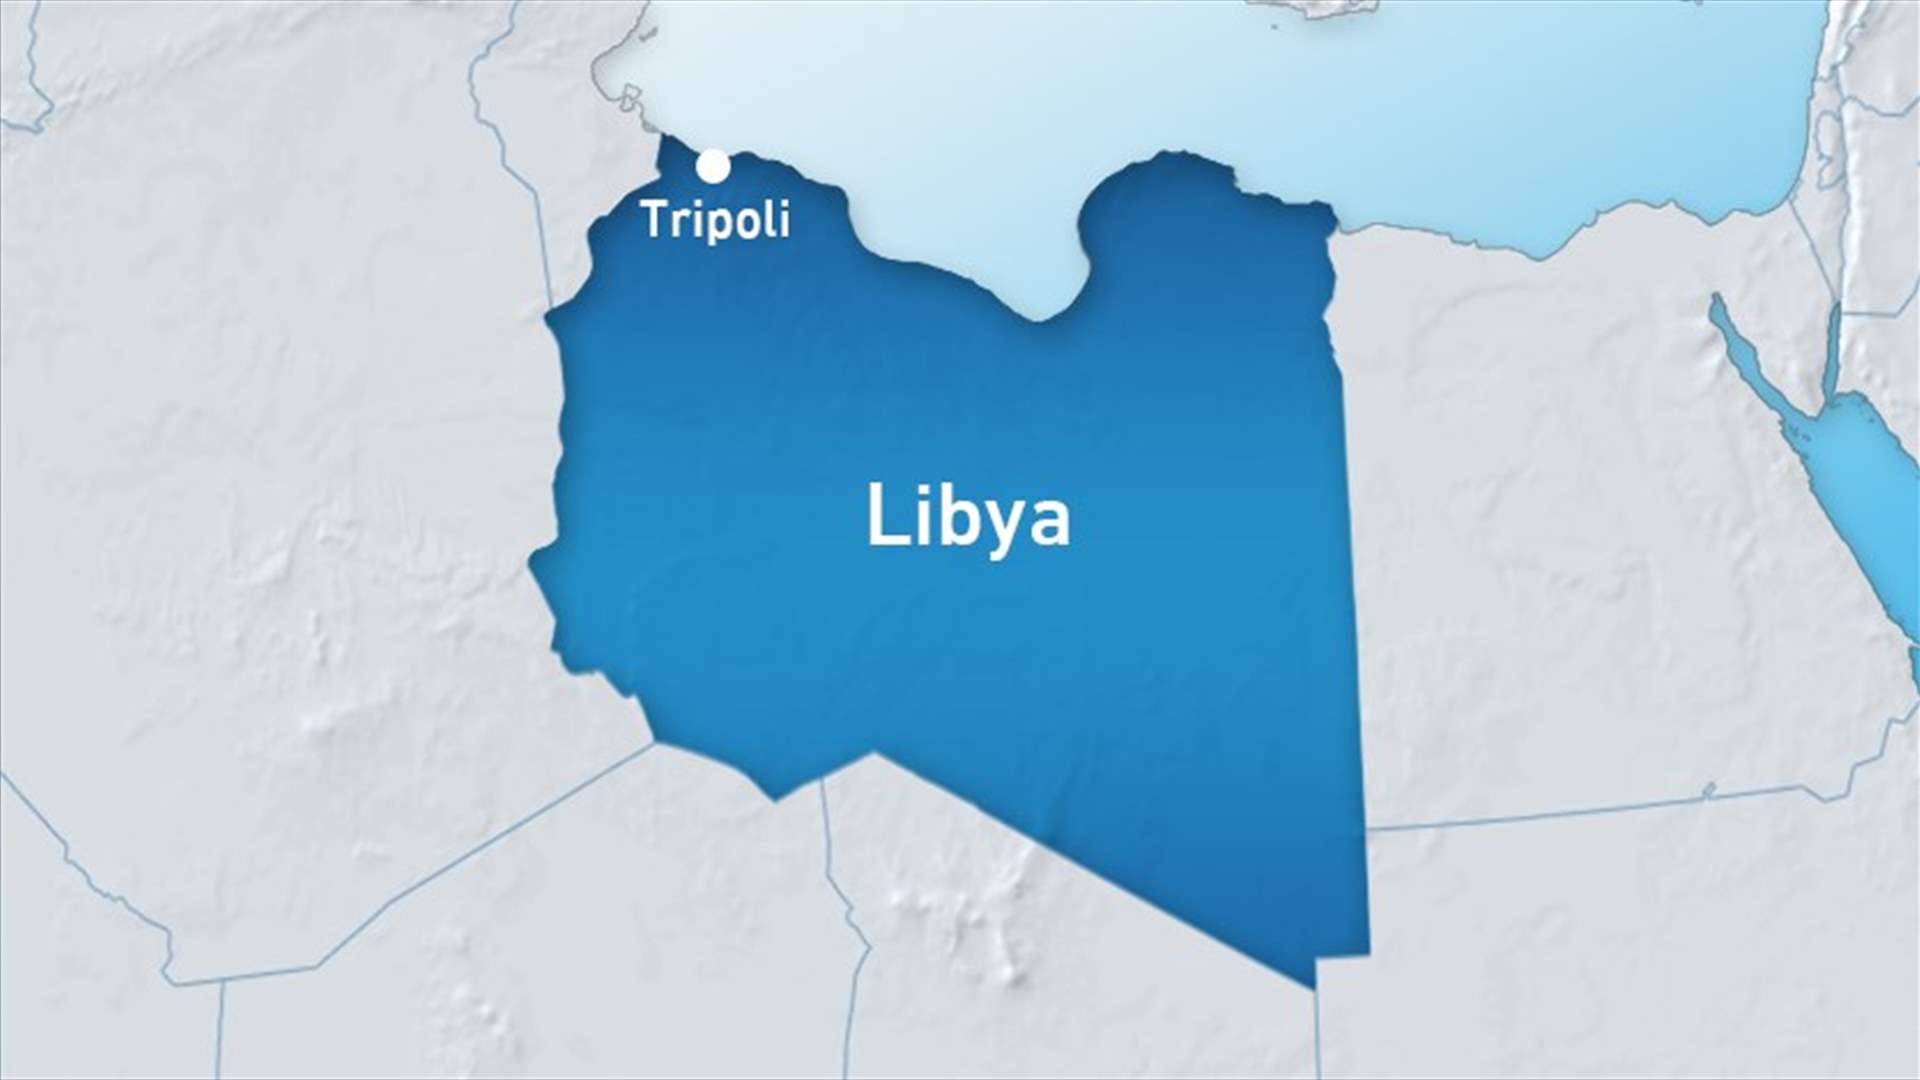 Air strike kills civilians in central Libya -doctor, eyewitness